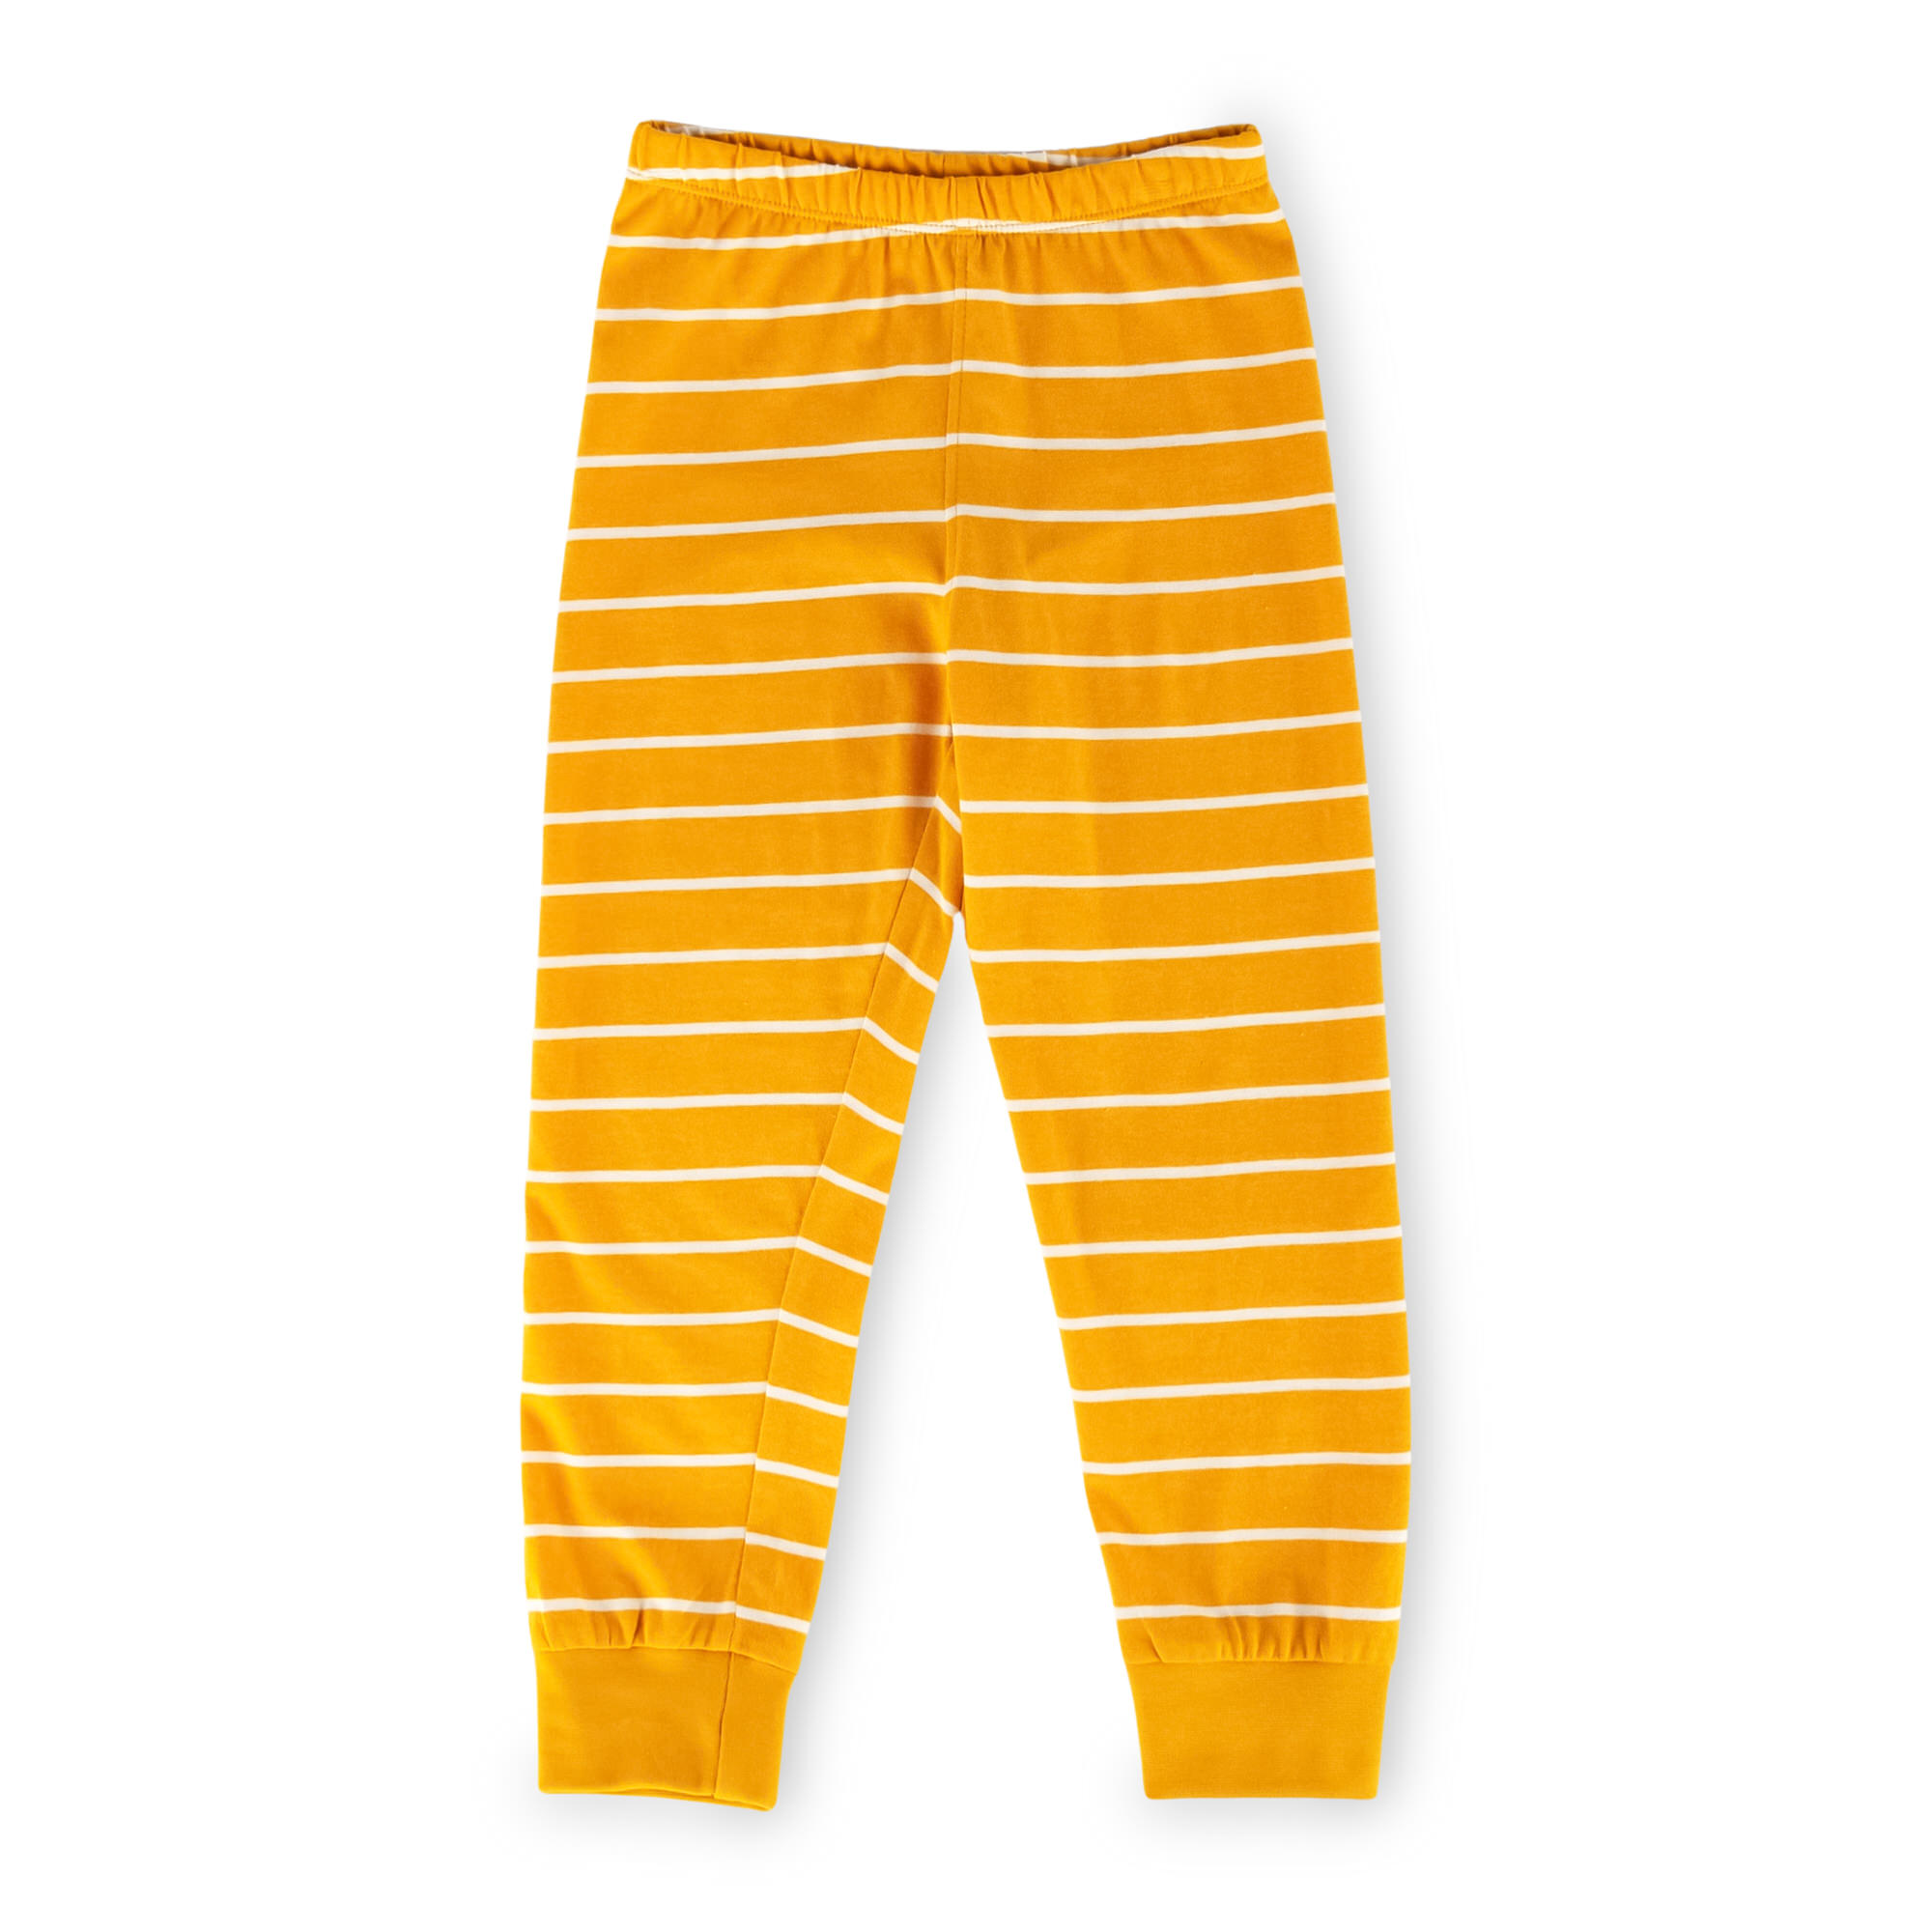 Children's long pants short sleeves pyjamas sleepy sleuth